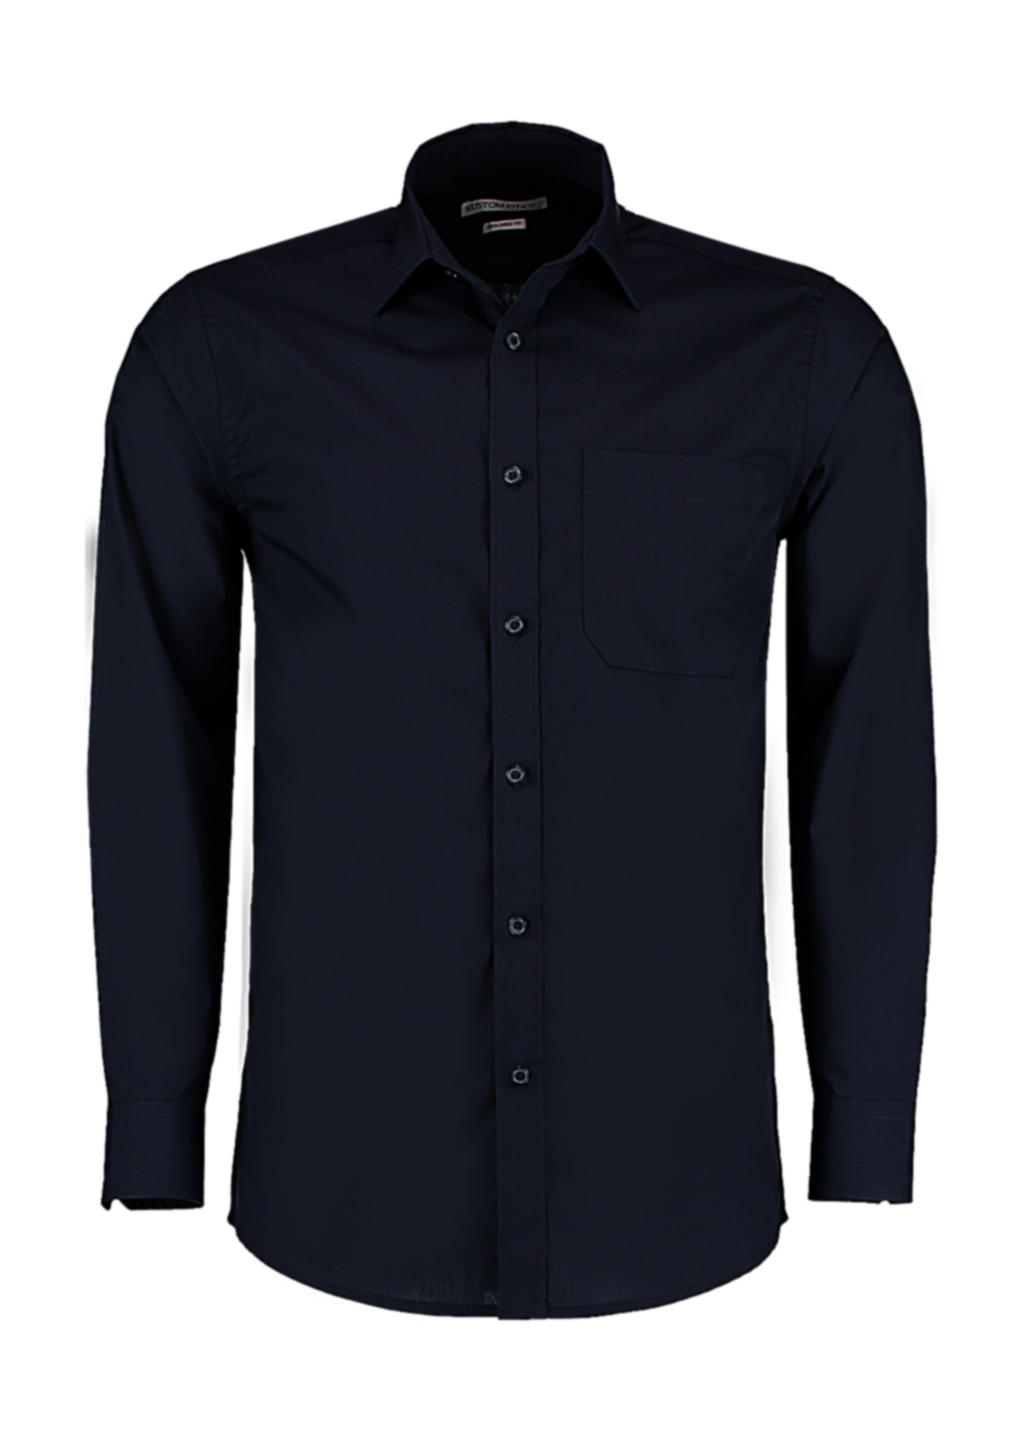 771.11 / Tailored Fit Poplin Shirt / Dark Navy